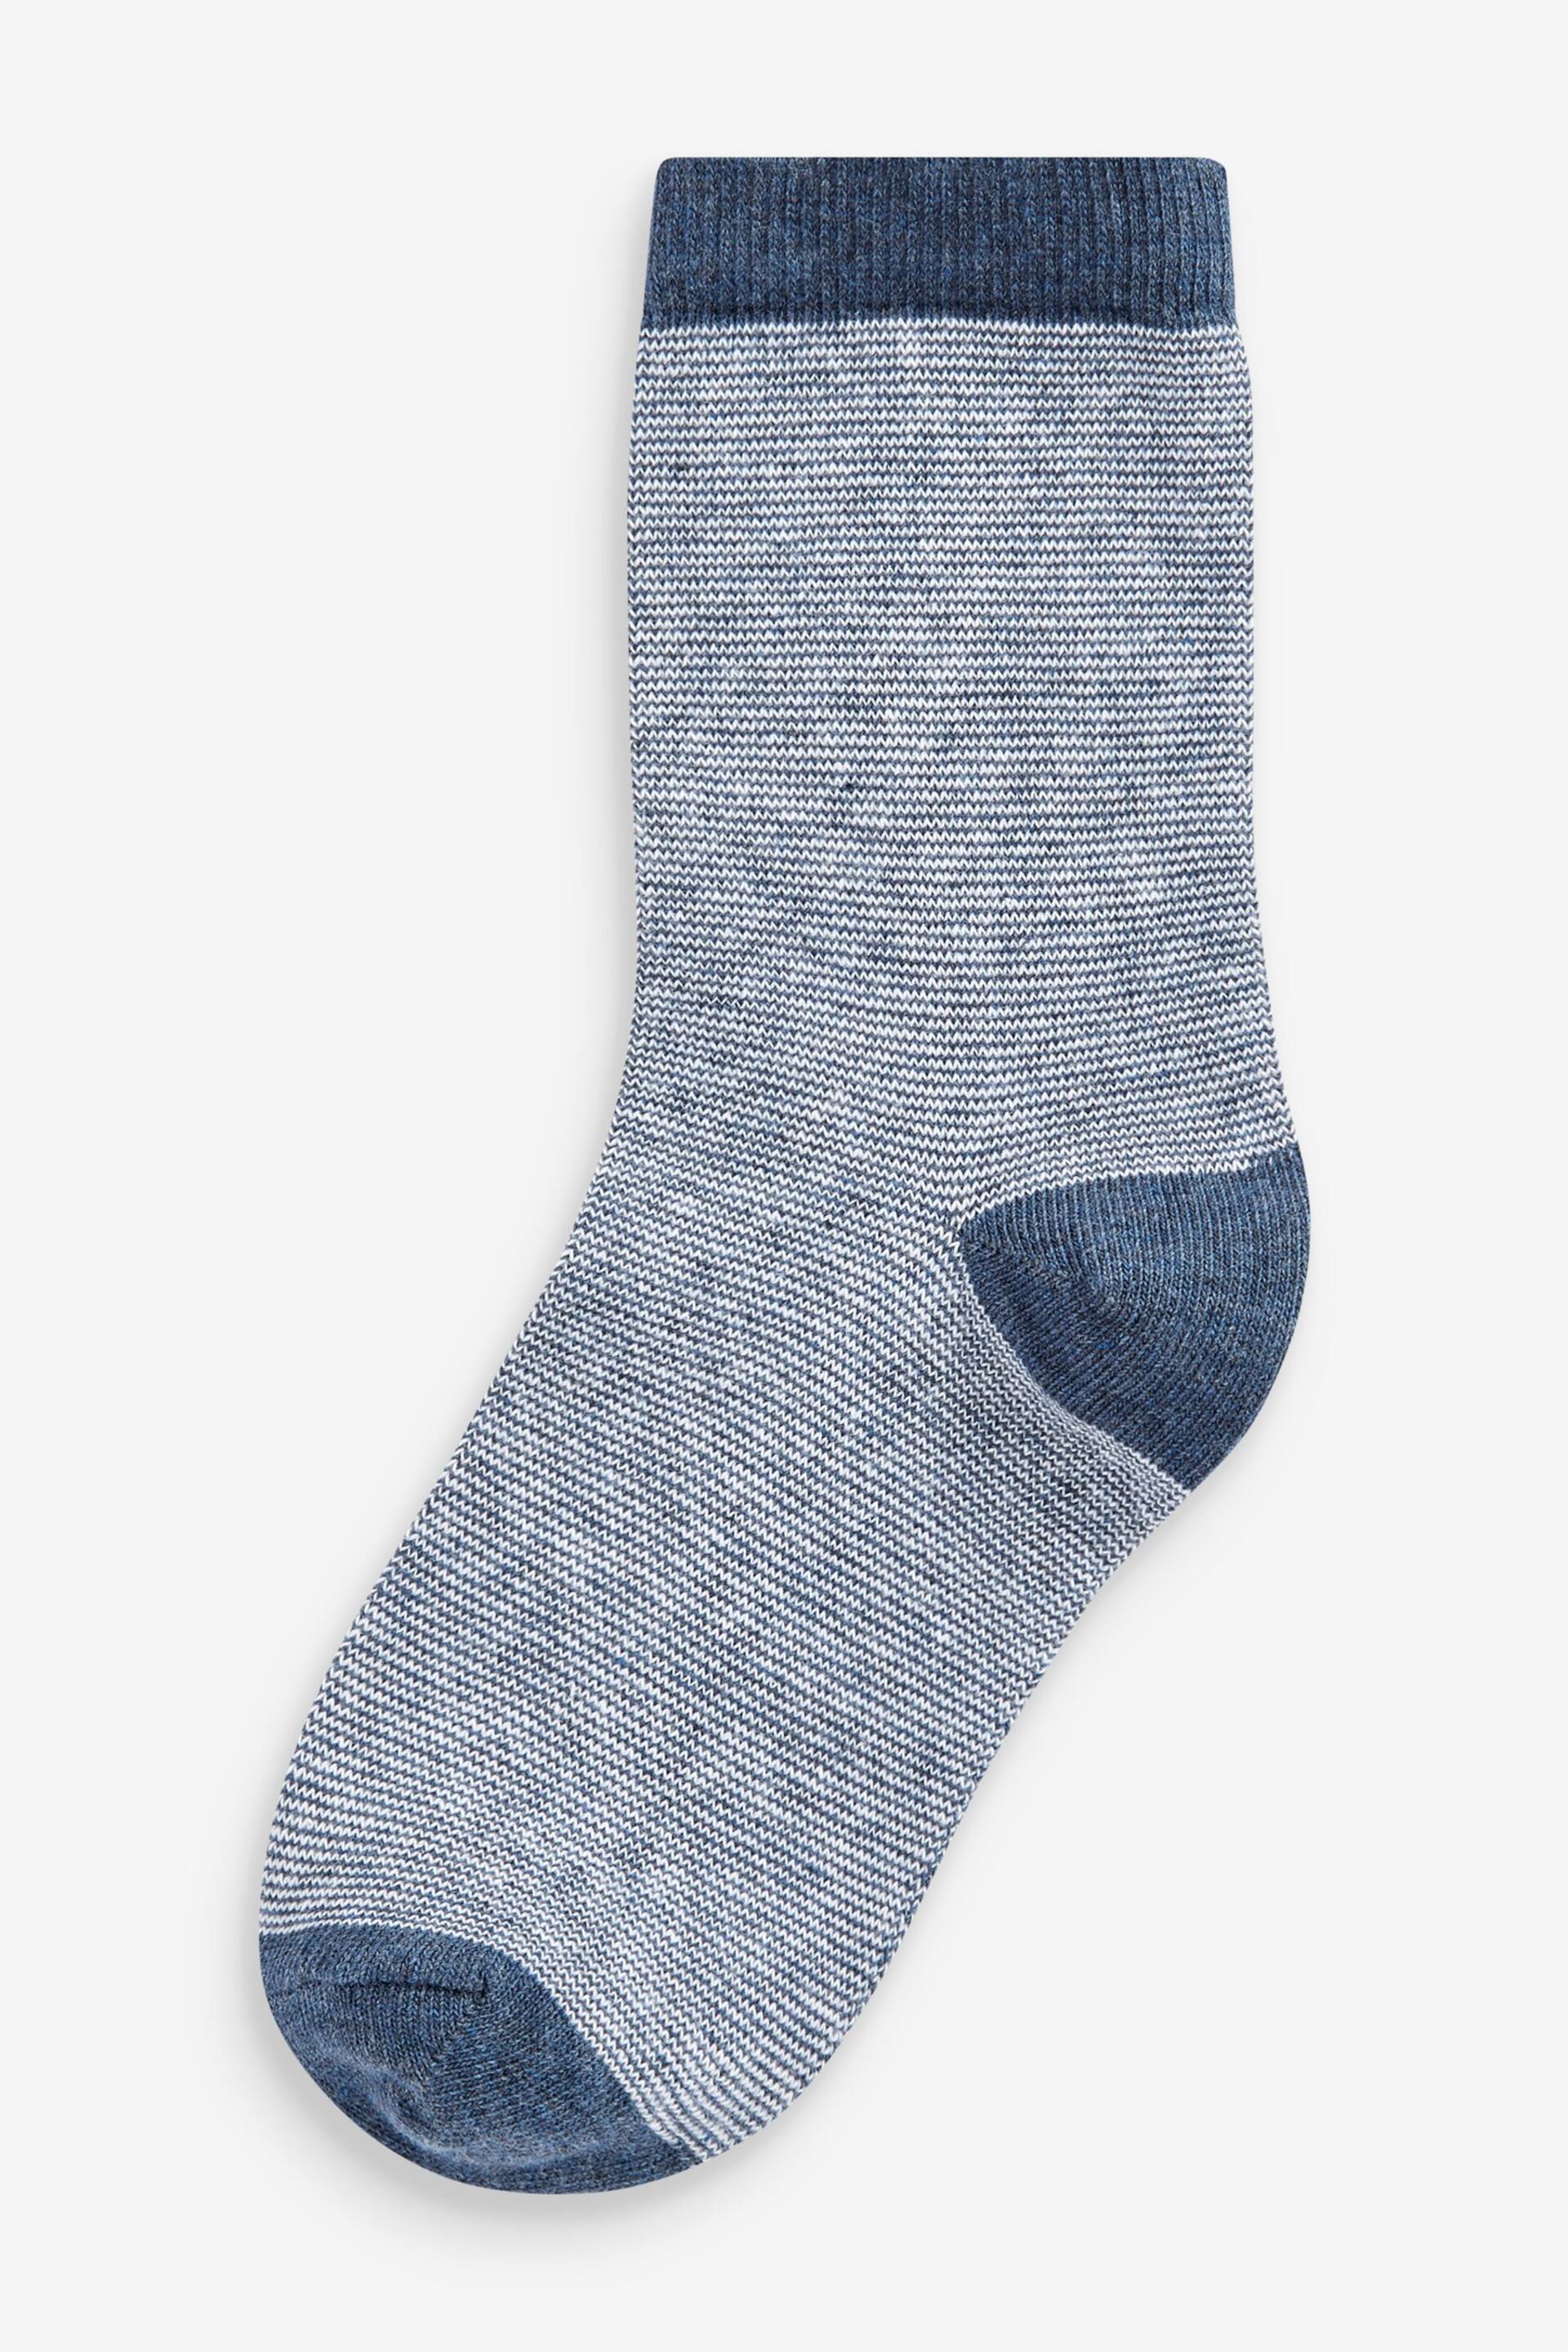 Blue Stars Cotton Rich Socks 7 Pack - Image 3 of 9